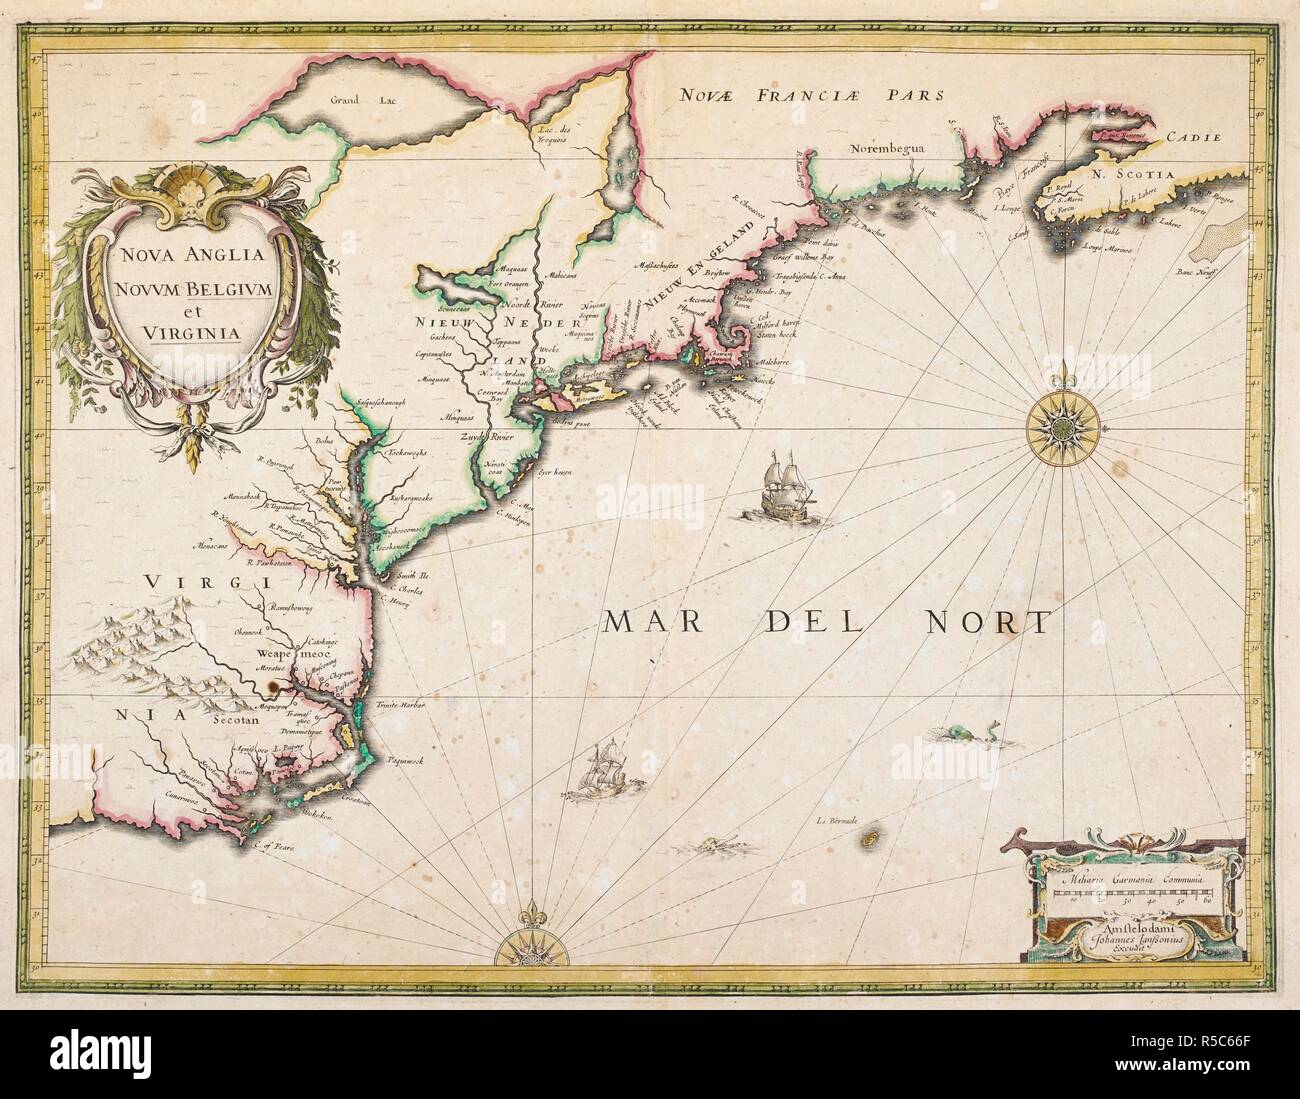 A map of New England, New Belgium and Virginia. NOVA ANGLIA NOVVM BELGIVM et VIRGINIA. Amstelodami [Amsterdam] : Johannes Janssonius Excudit, [between 1636 and 1647.]. Source: Maps K.Top.120.9. Language: Latin. Stock Photo